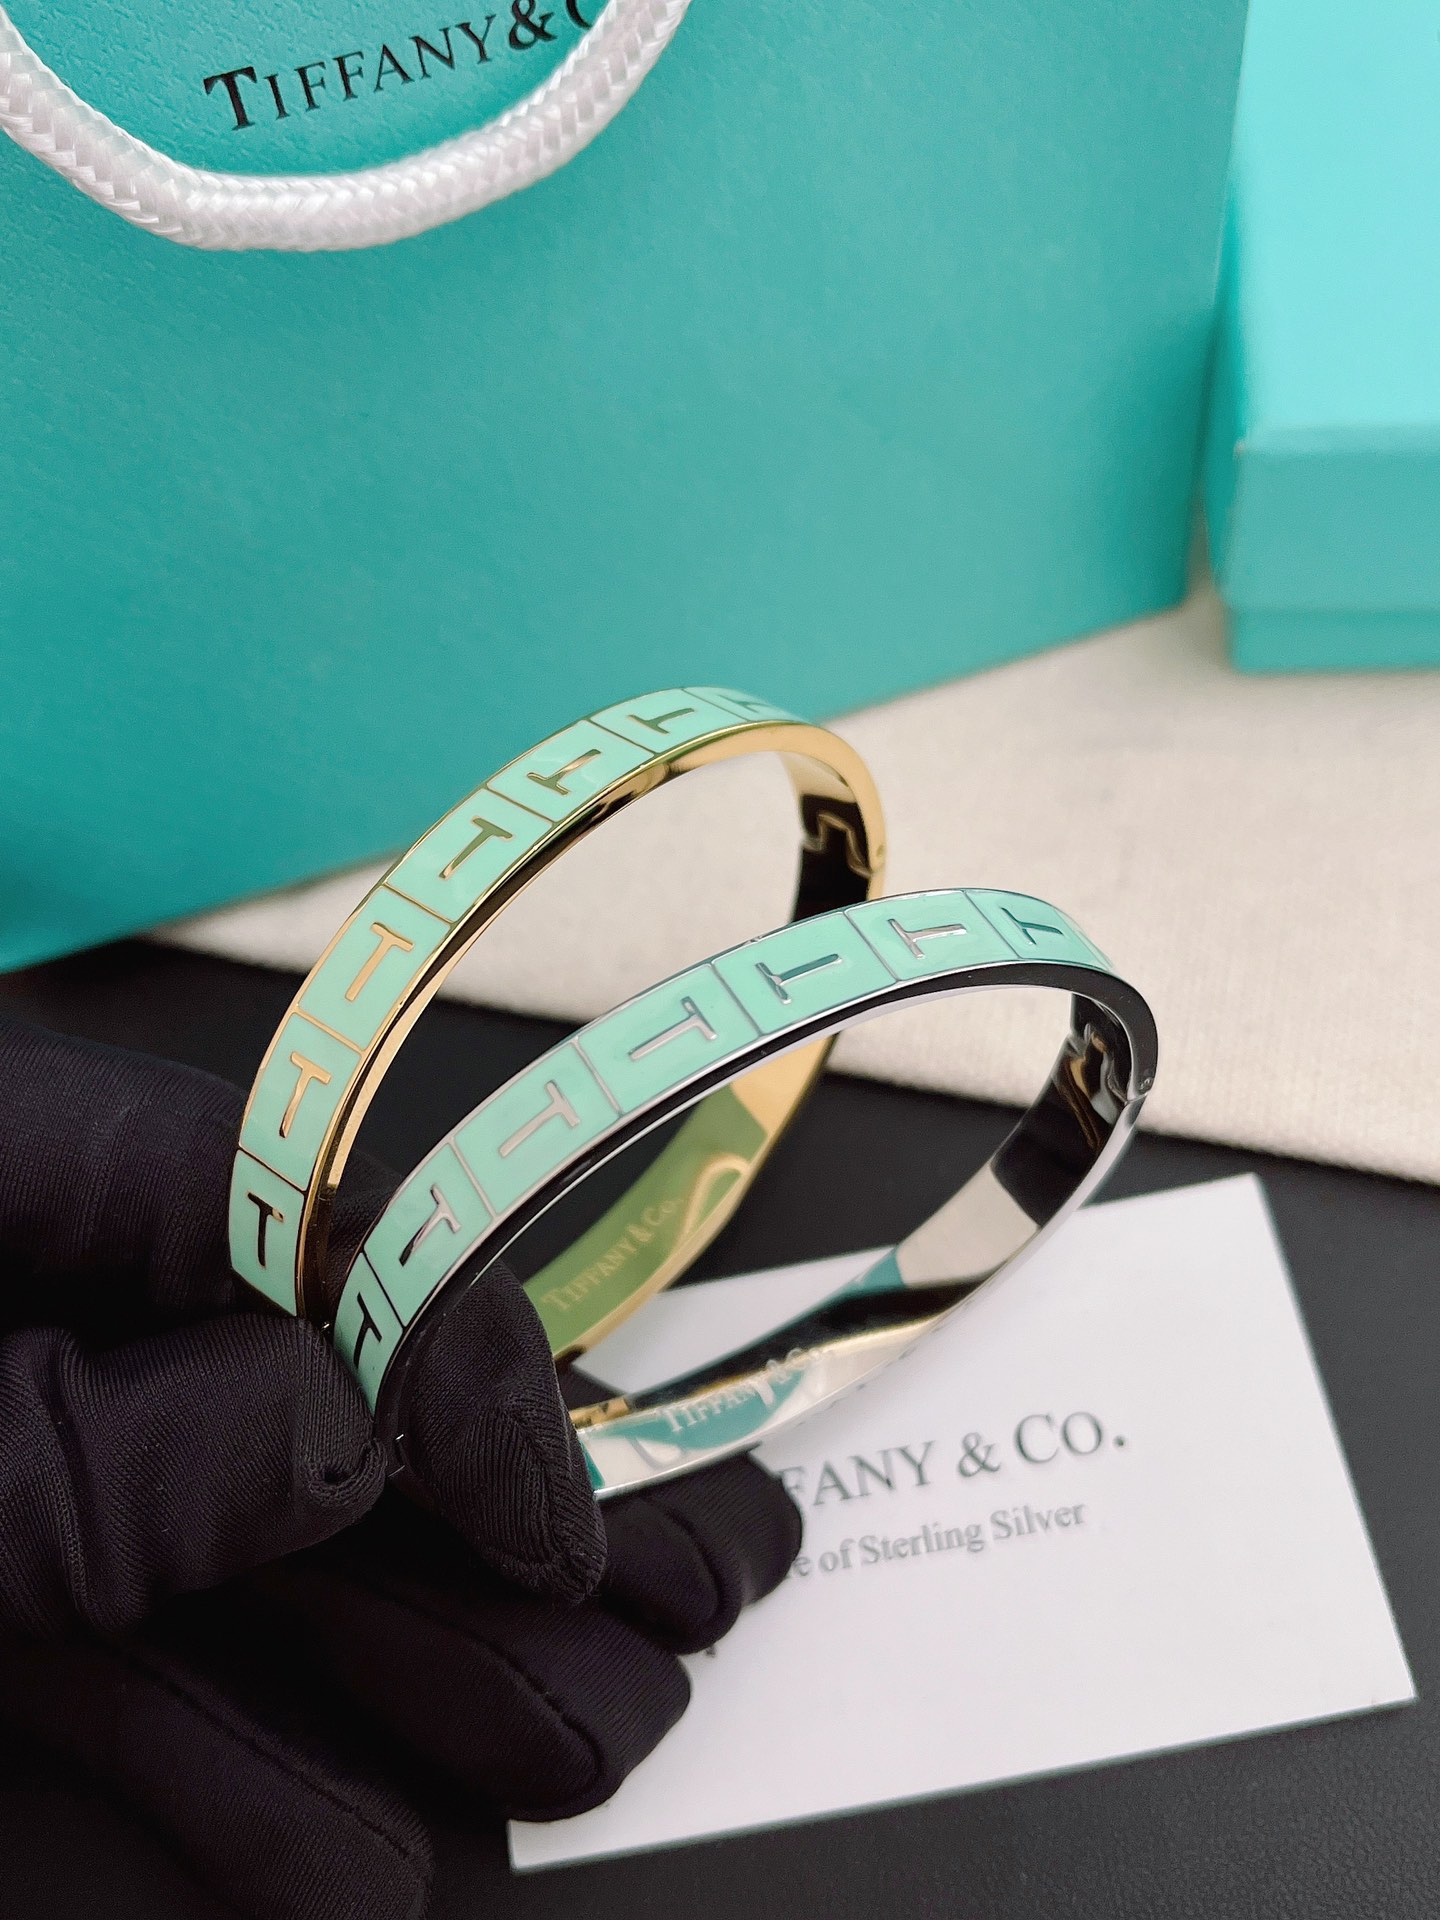 S364 Tiffany co bracelet